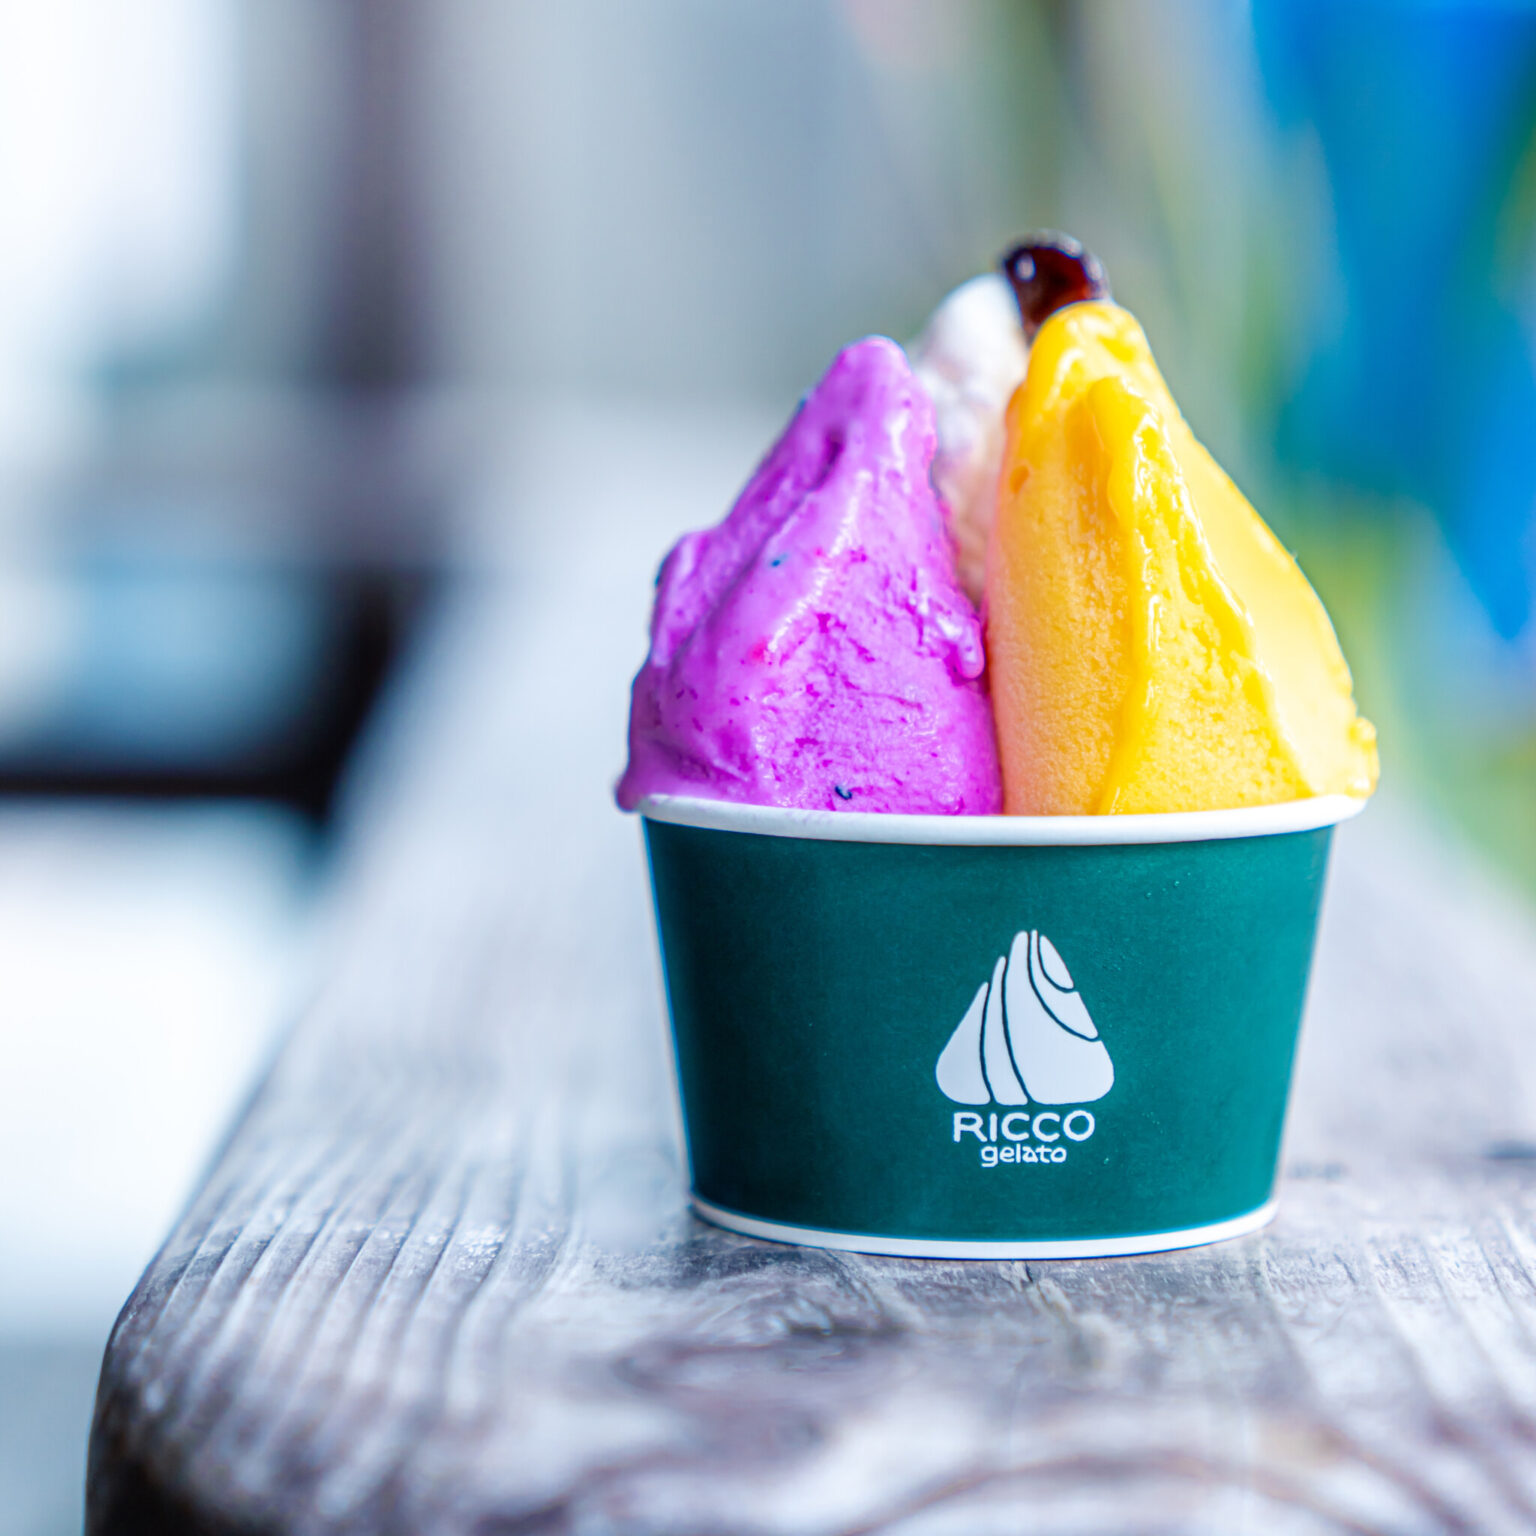 #RICCO gelato #宮古島の天然素材を使ったジェラート